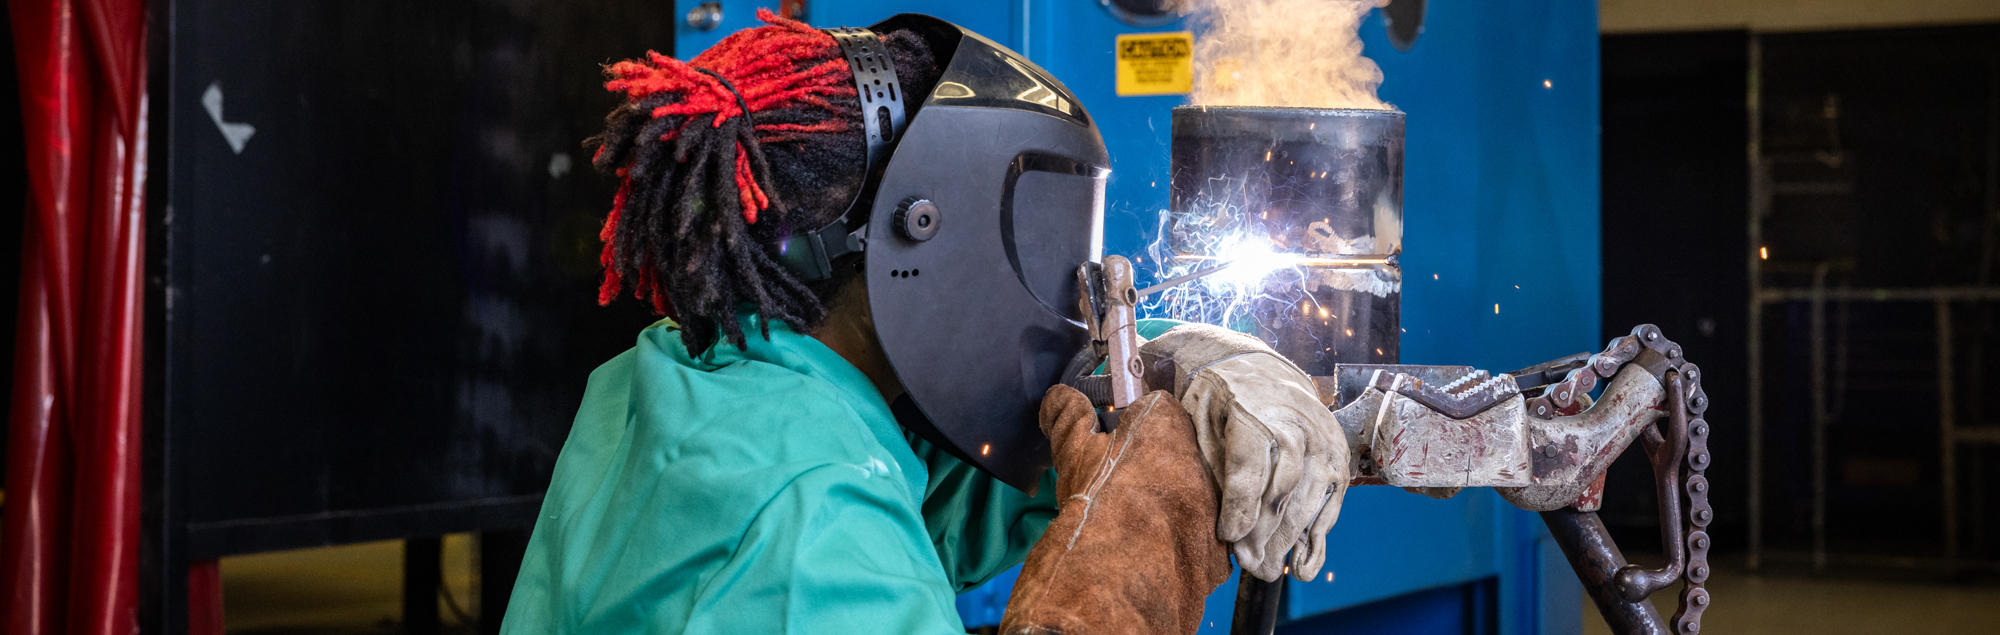 Welding students at FDTC practice welding in the welding lab